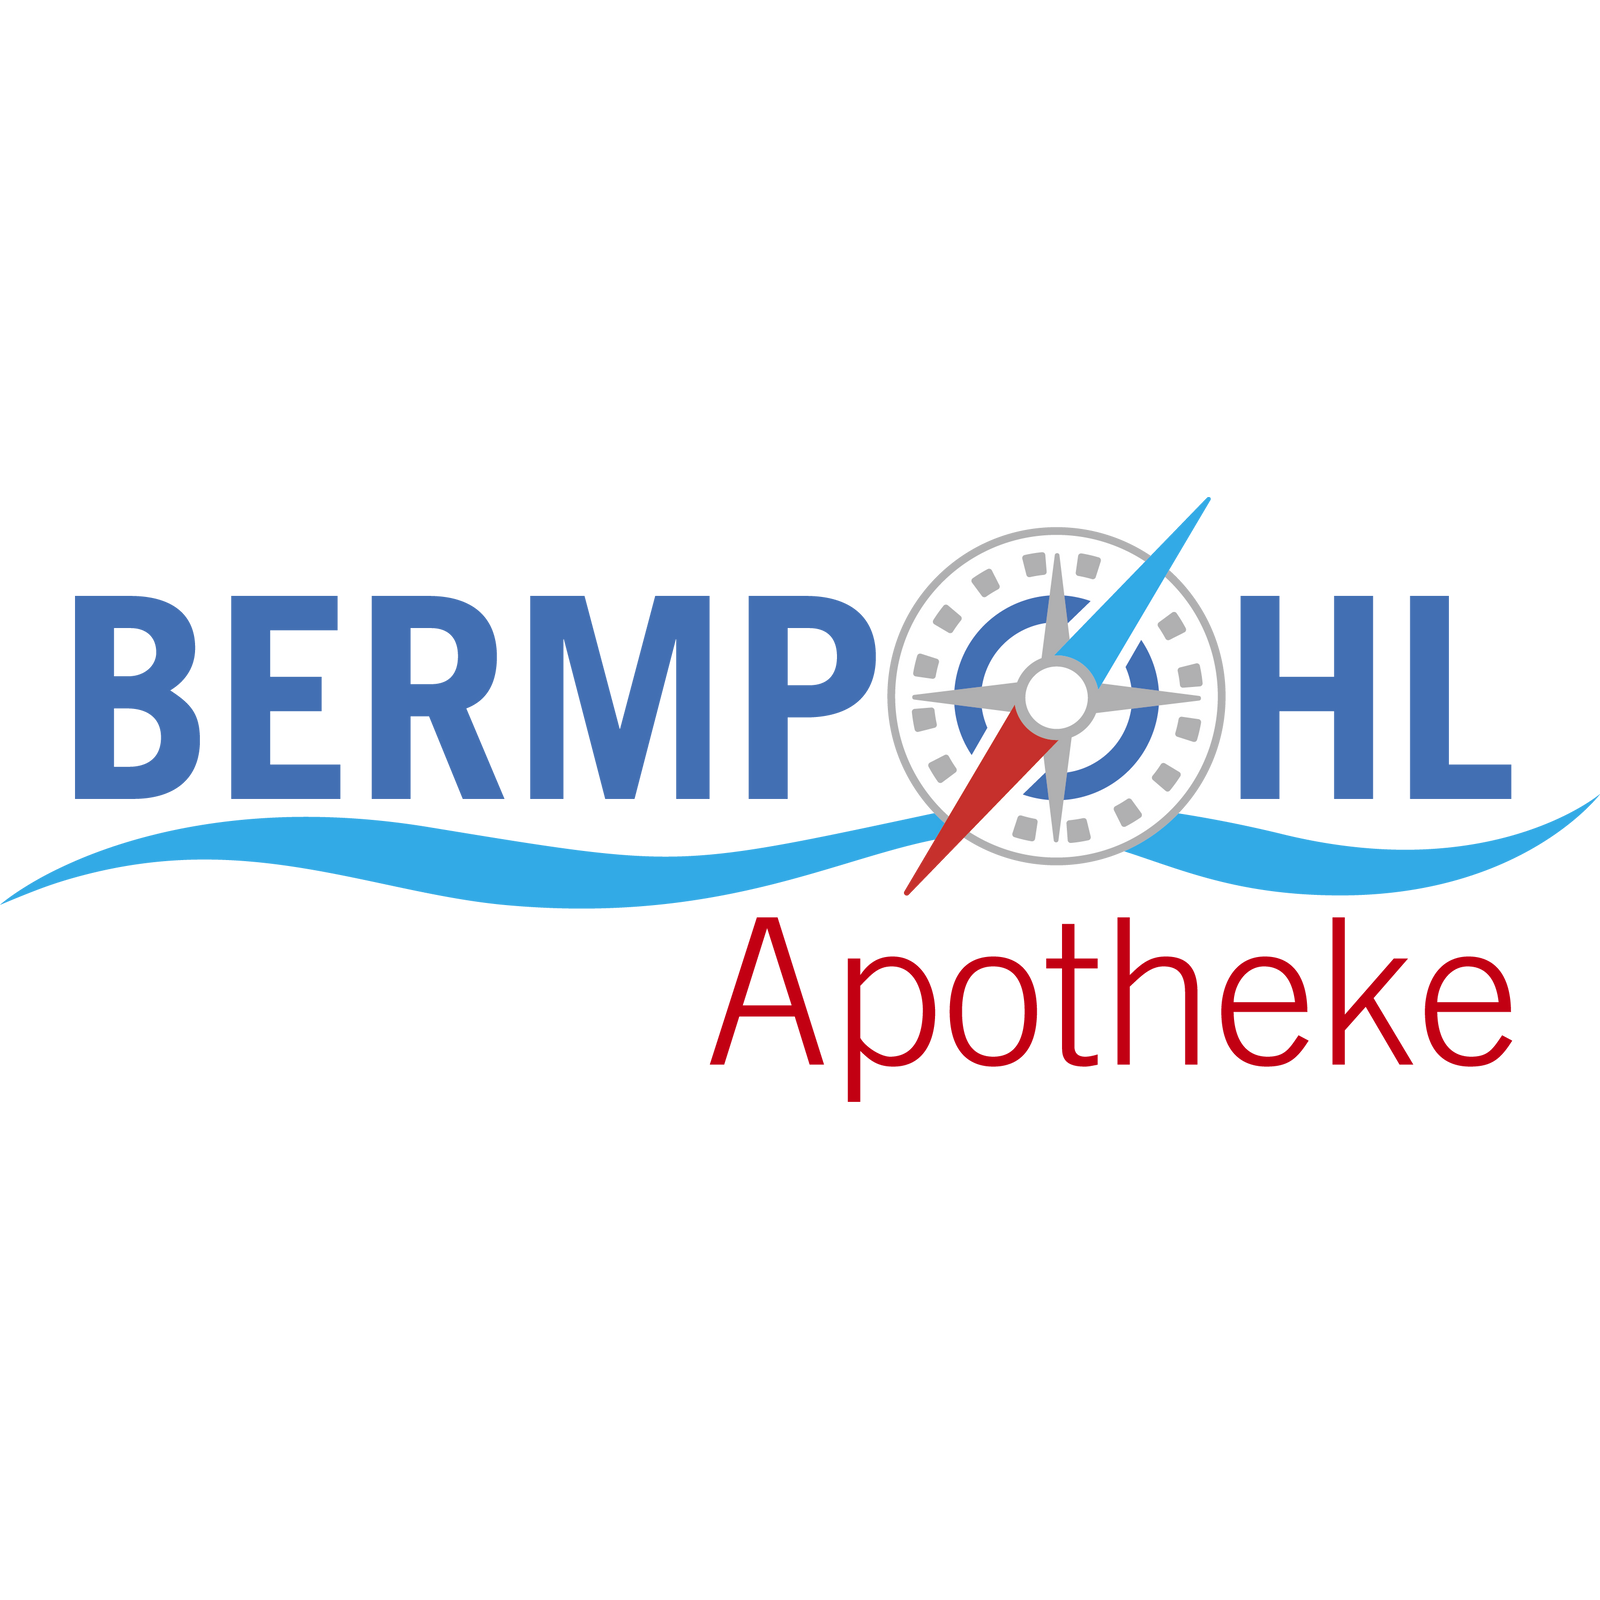 Bermpohl-Apotheke in Bremen - Logo